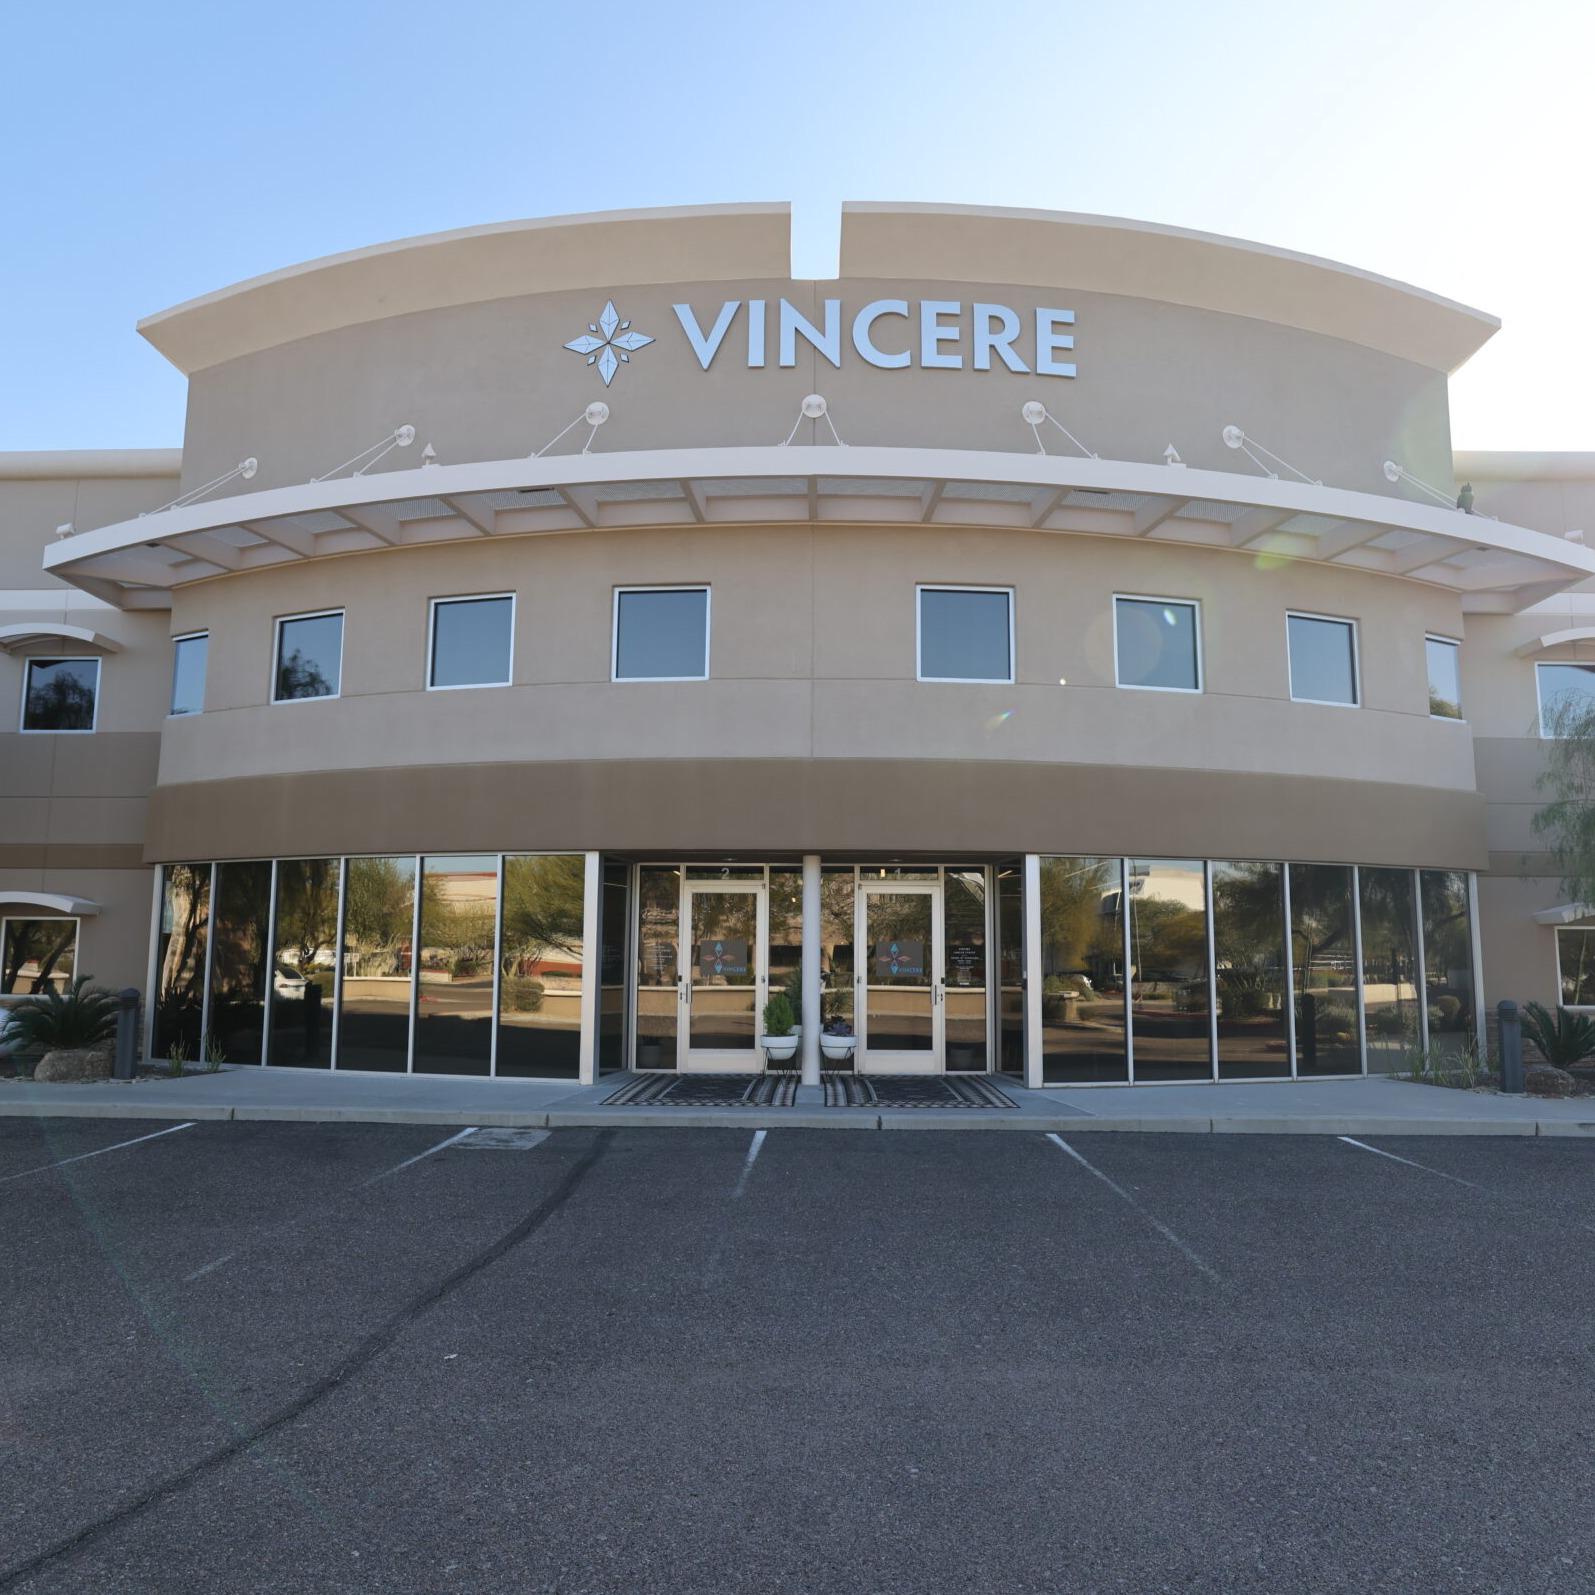 Vincere Cancer Center - Scottsdale, AZ 85260 - (480)306-5390 | ShowMeLocal.com